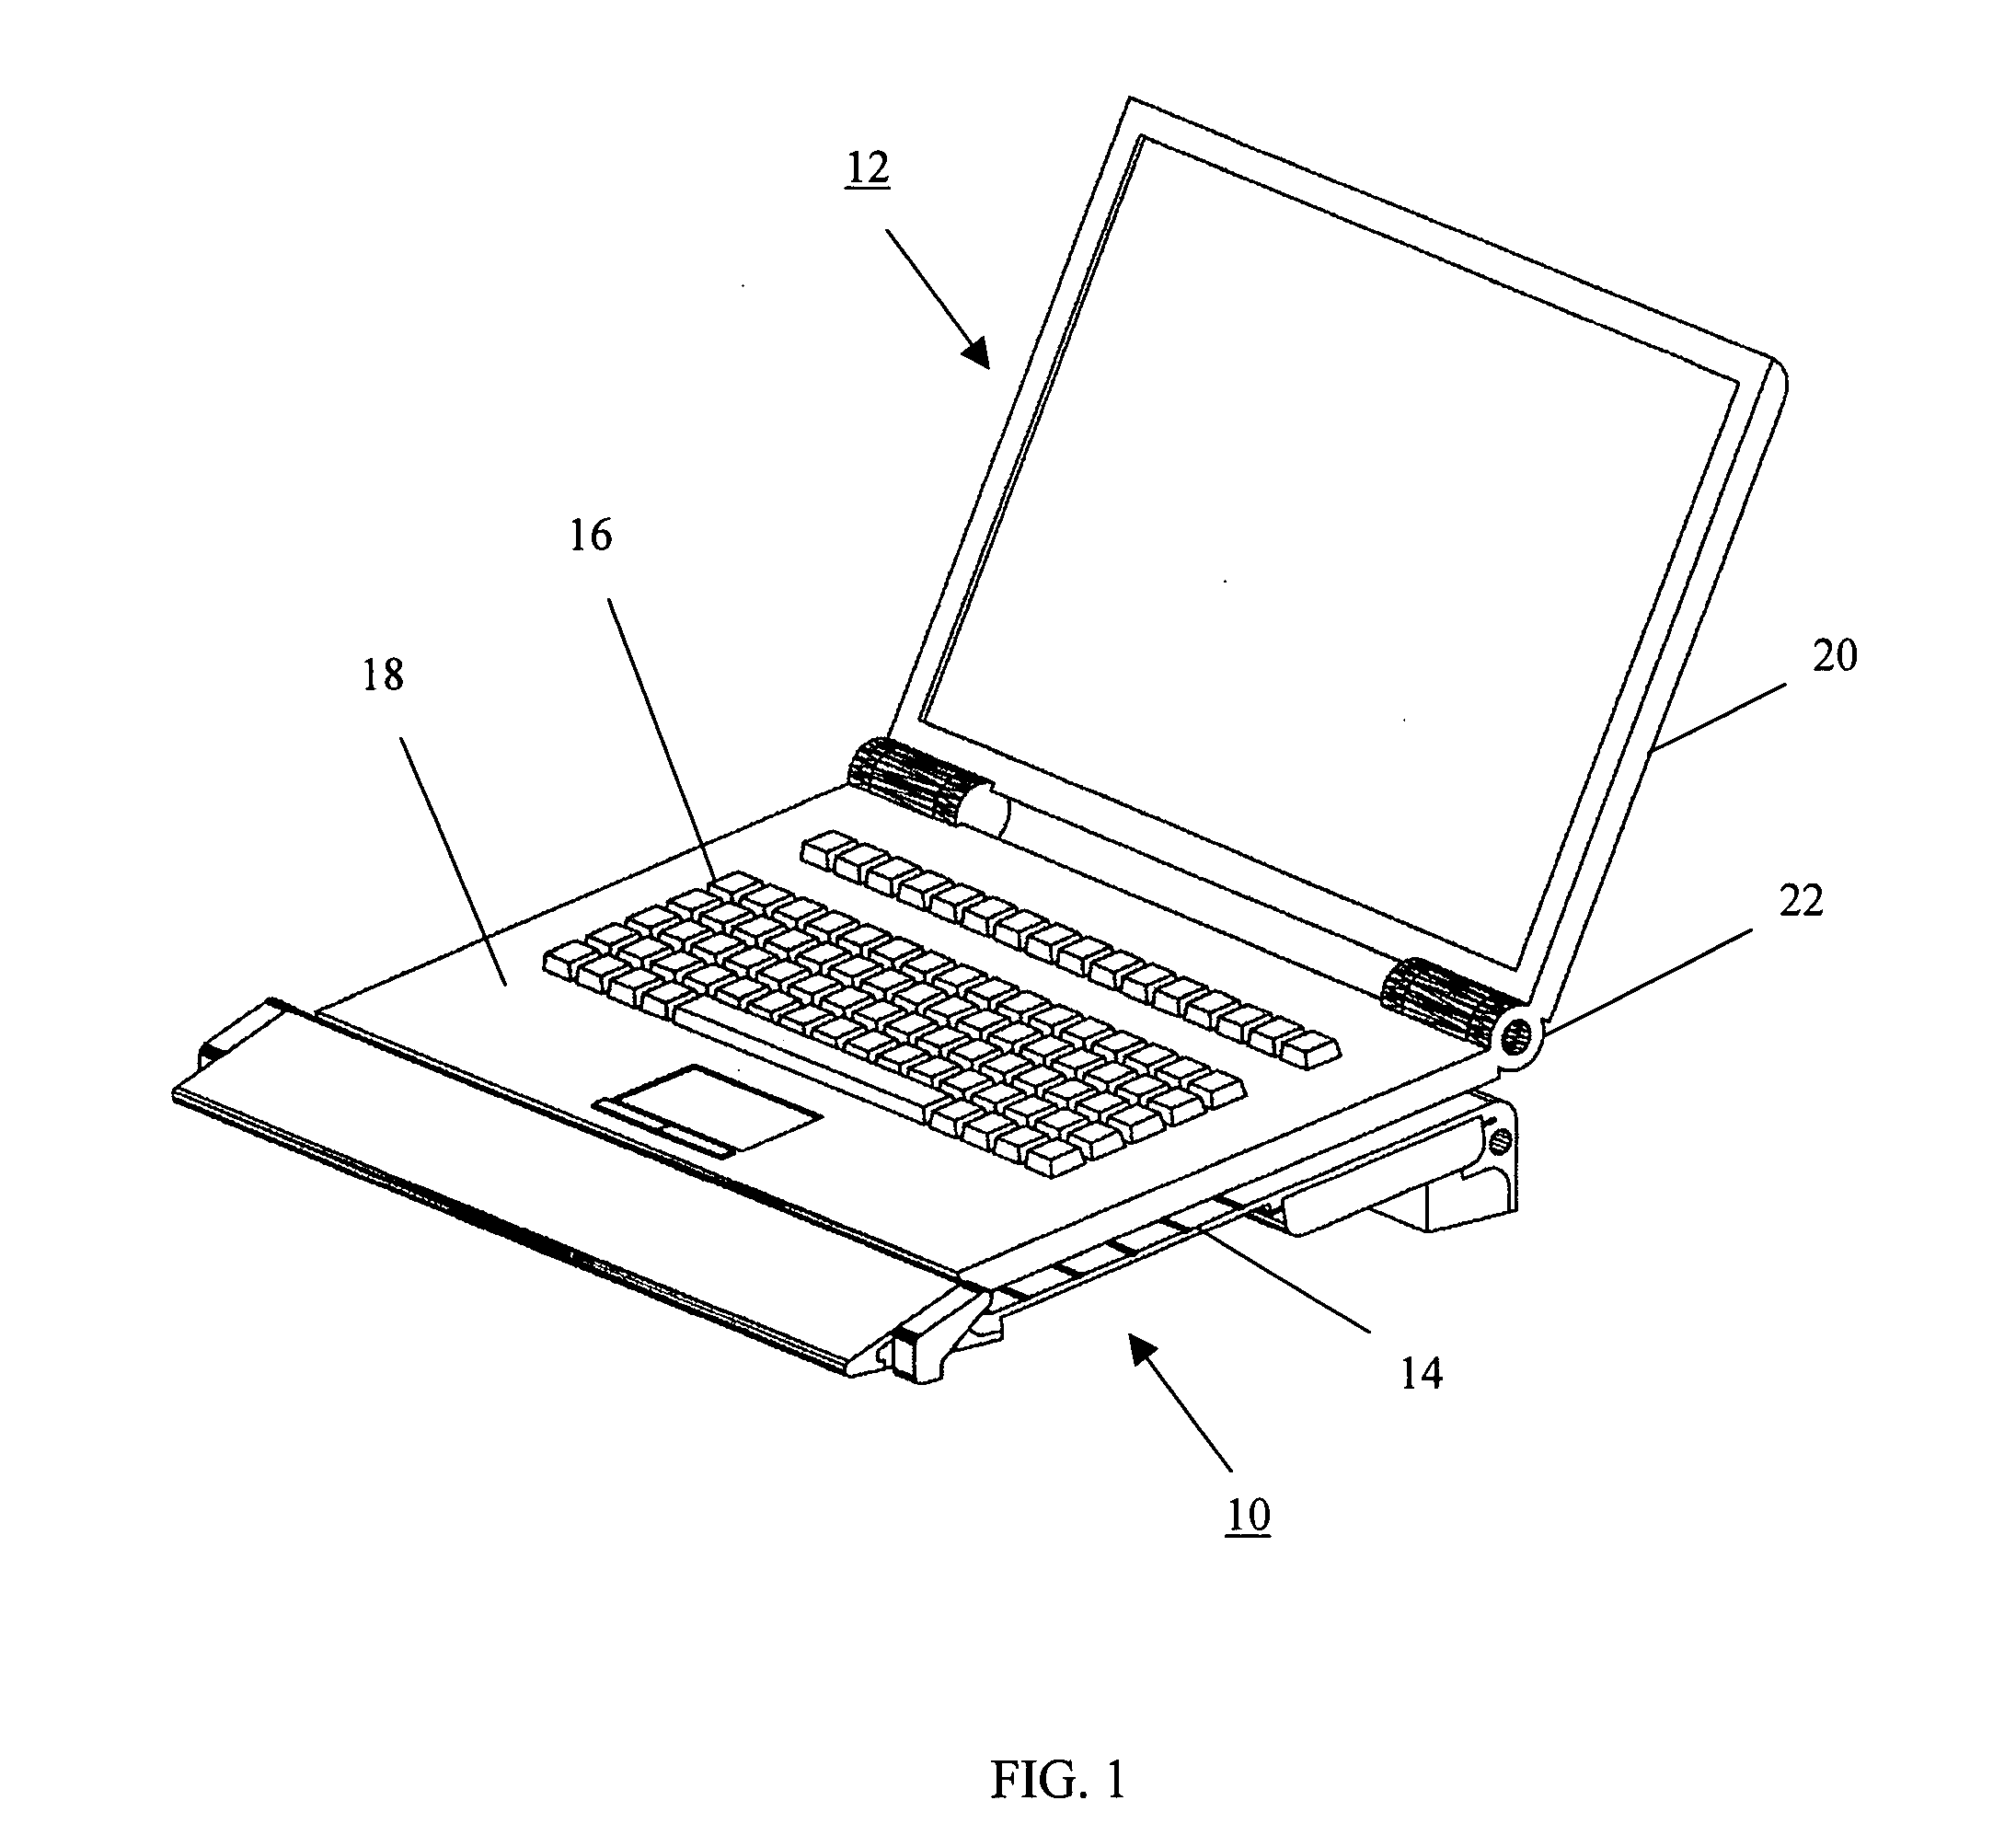 Moveable platform for a laptop computer